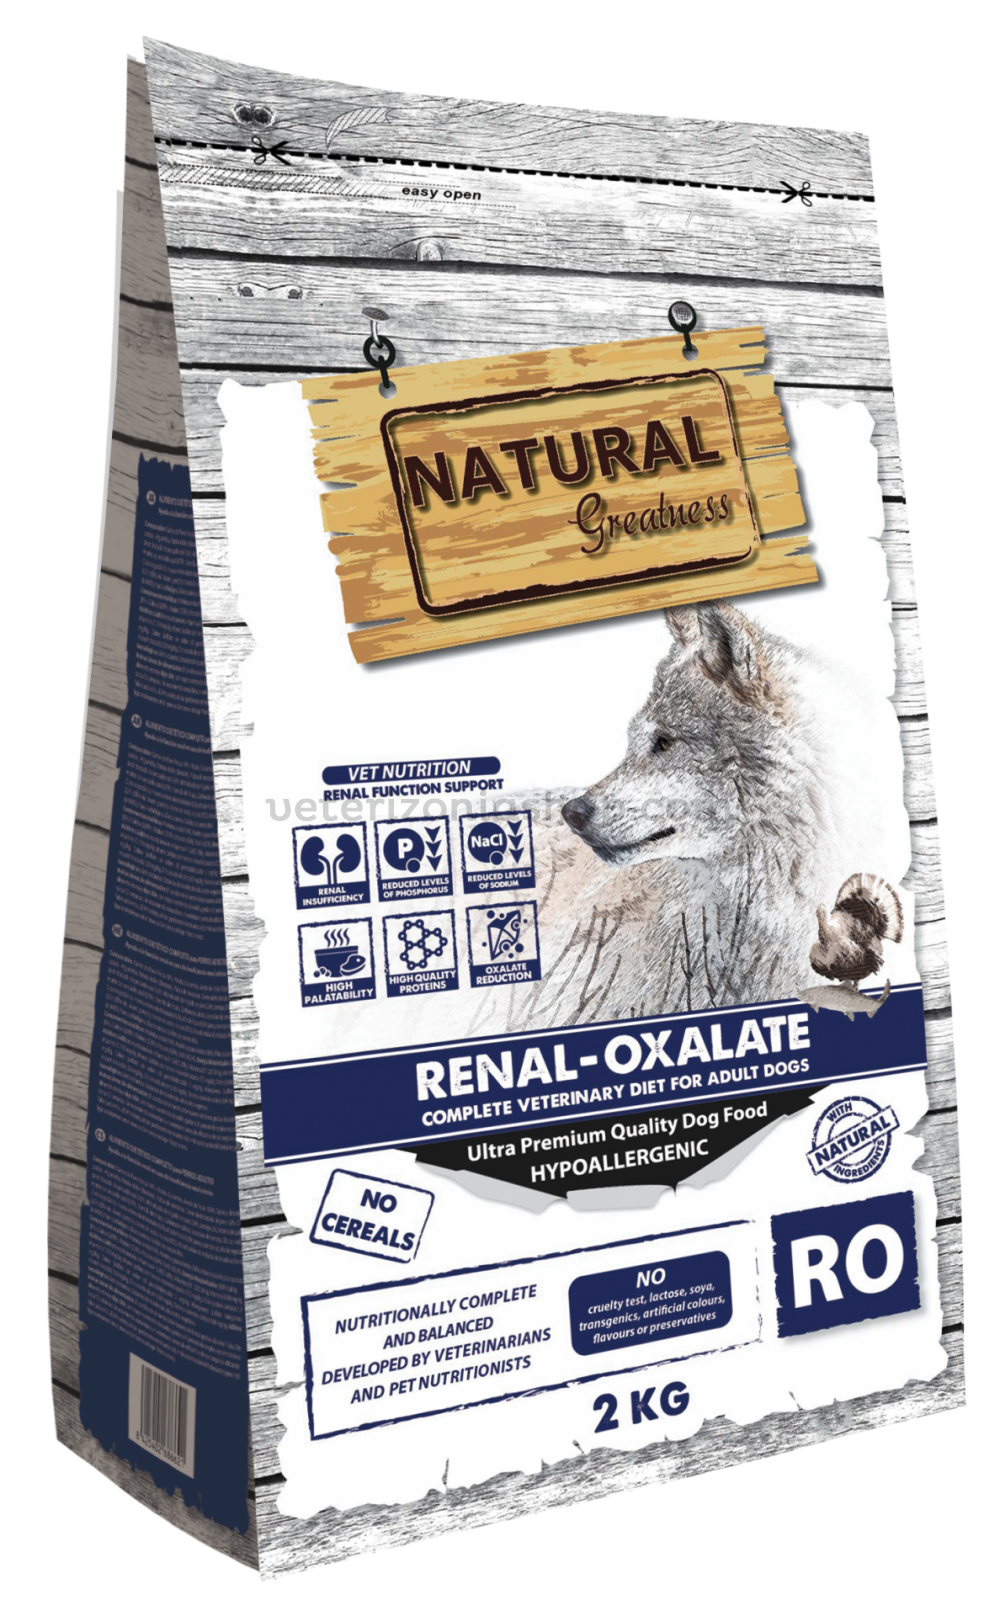 Natural-Greatness-dieta-renal-oxalate-pienso-para-perros2